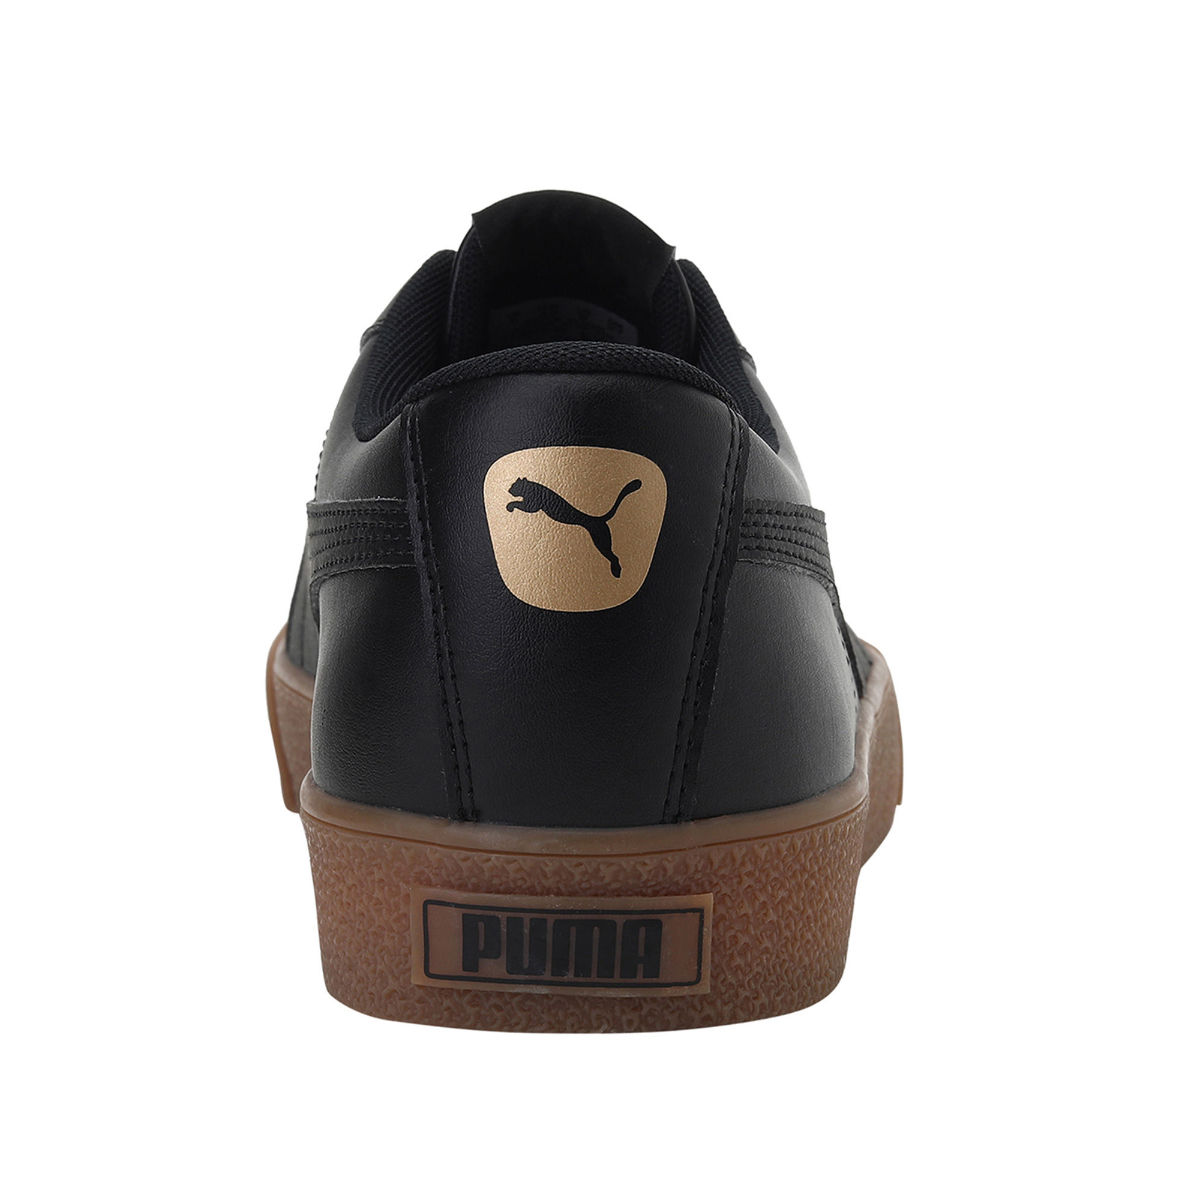 Buy PUMA Unisex Adult Bari High Rise White-Gum Sneaker-8UK (36911611) at  Amazon.in